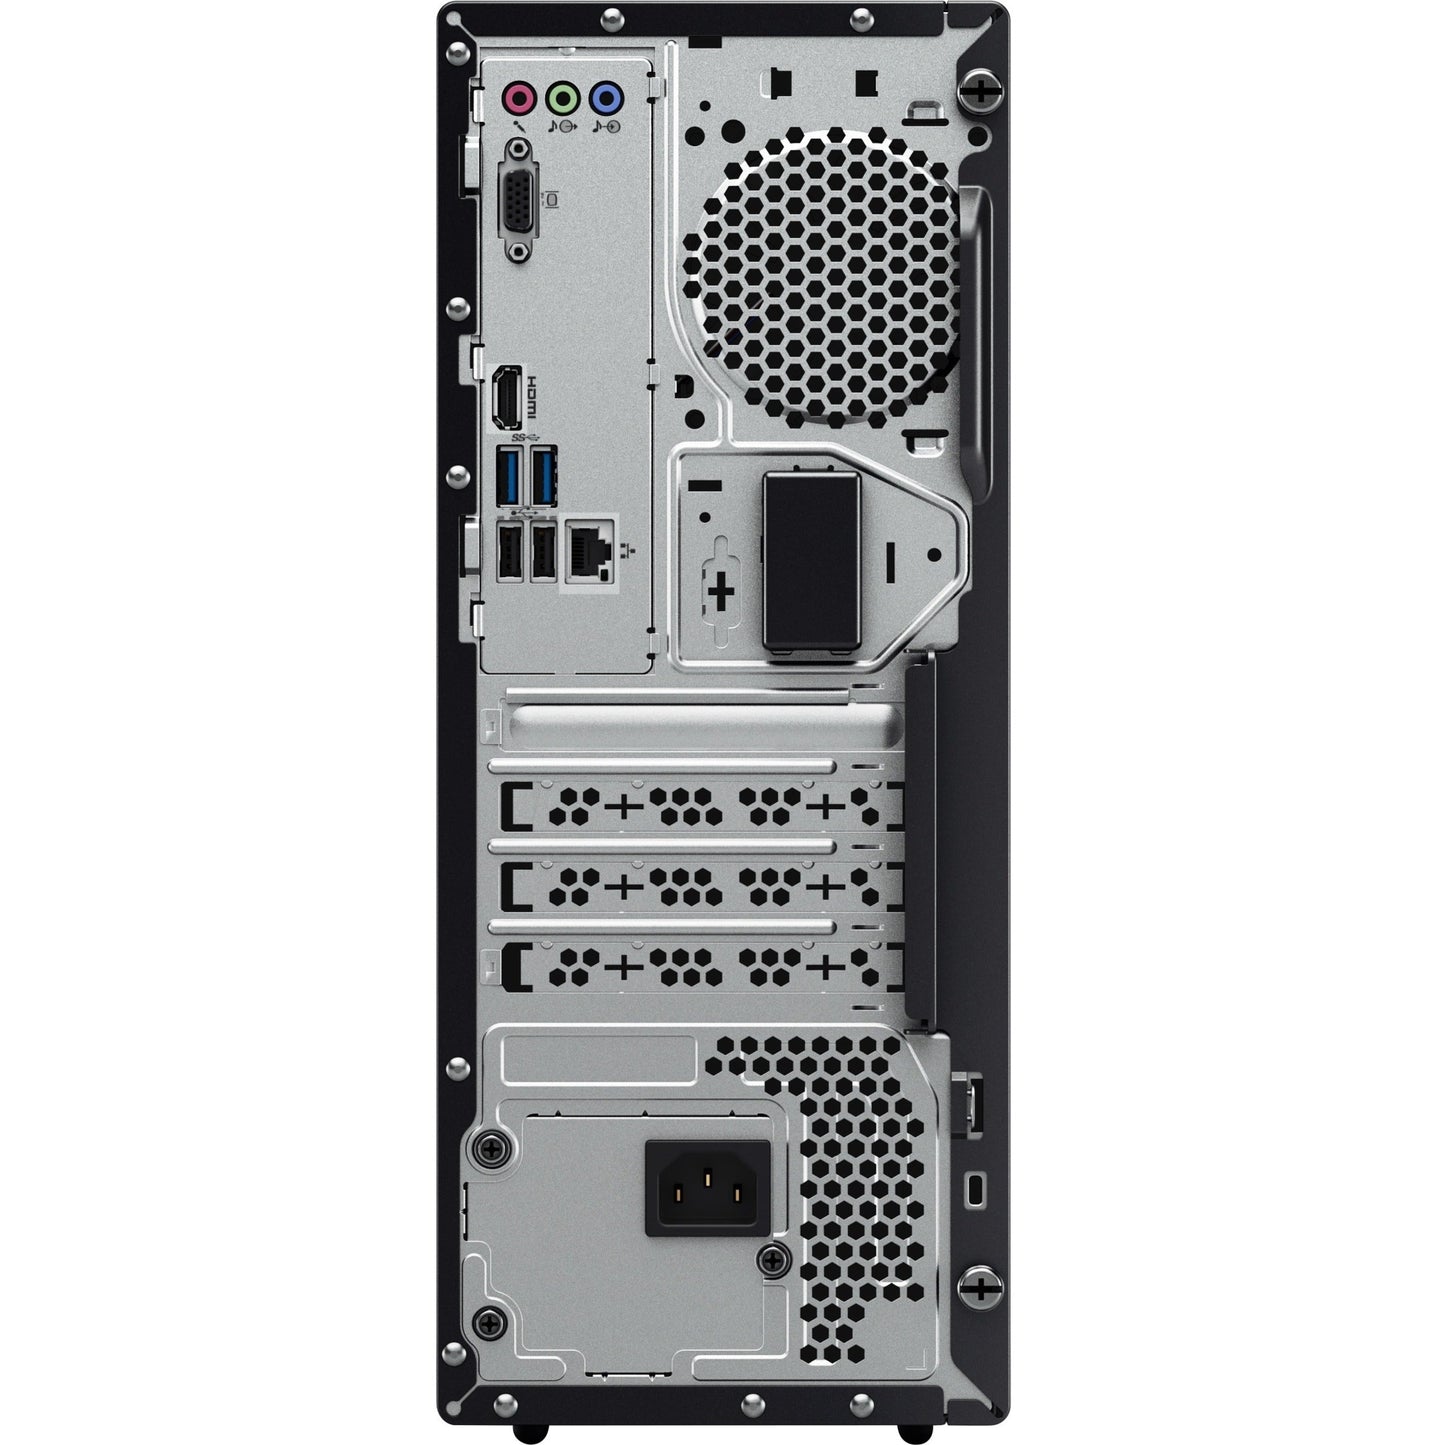 Lenovo IdeaCentre 510A-15ICB 90HV001VUS Desktop Computer - Intel Core i5 8th Gen i5-8400 2.80 GHz - 8 GB RAM DDR4 SDRAM - 128 GB SSD - Tower - Black